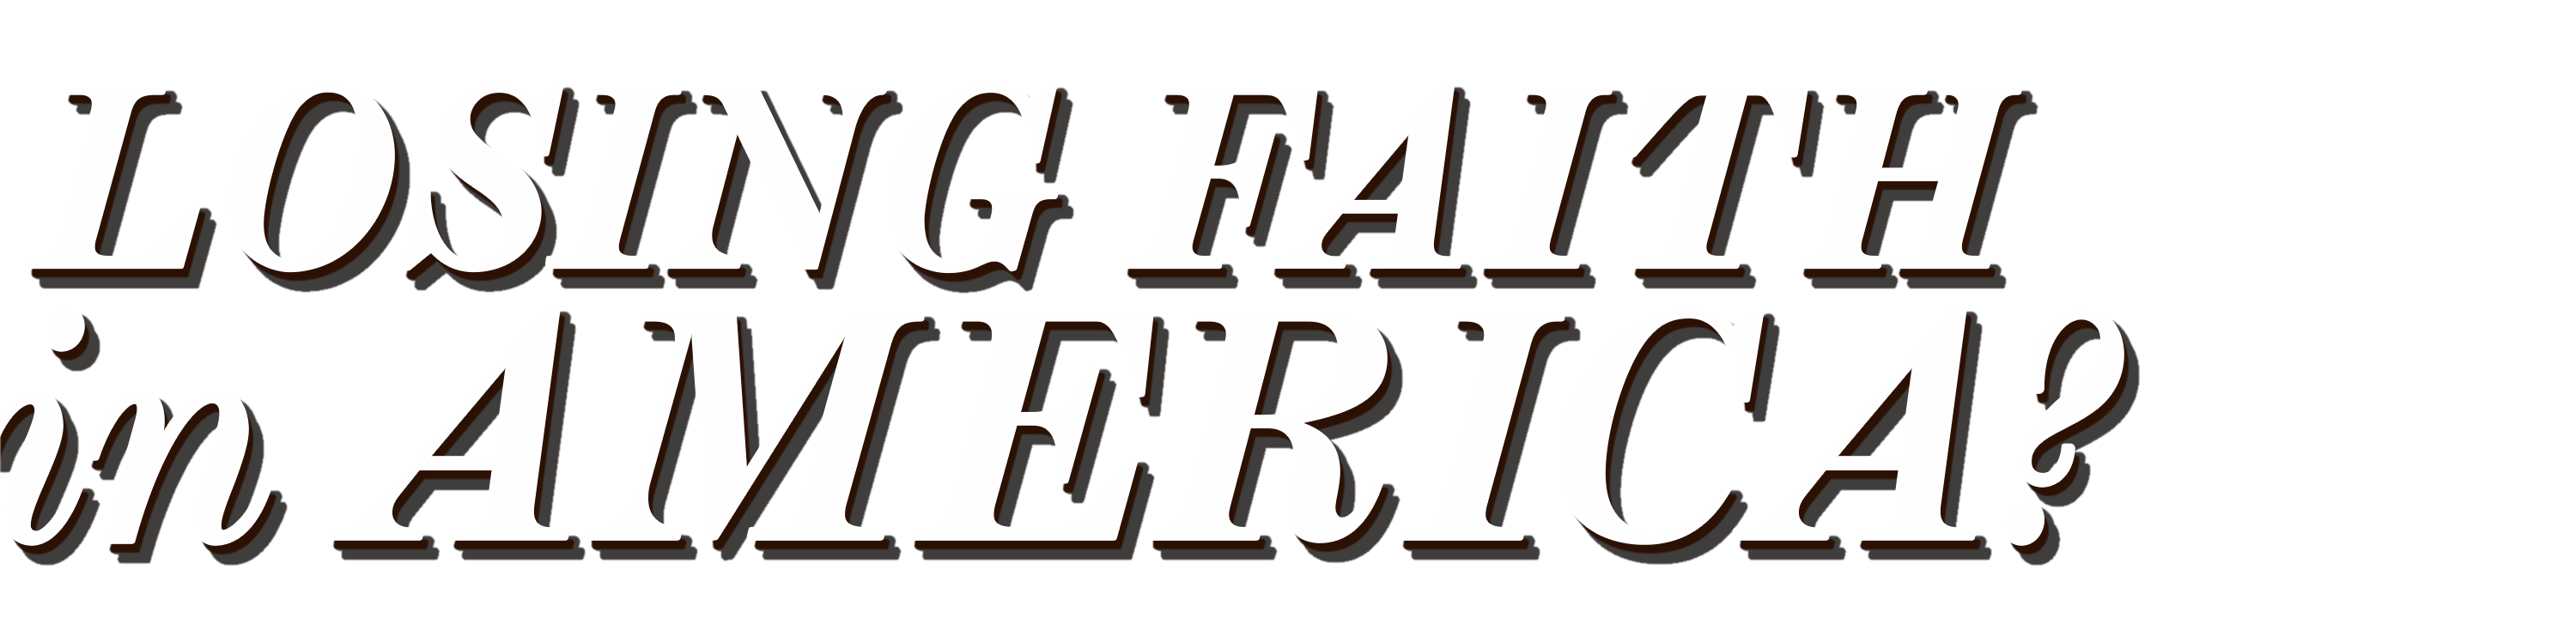 Losing Faith in America? logo